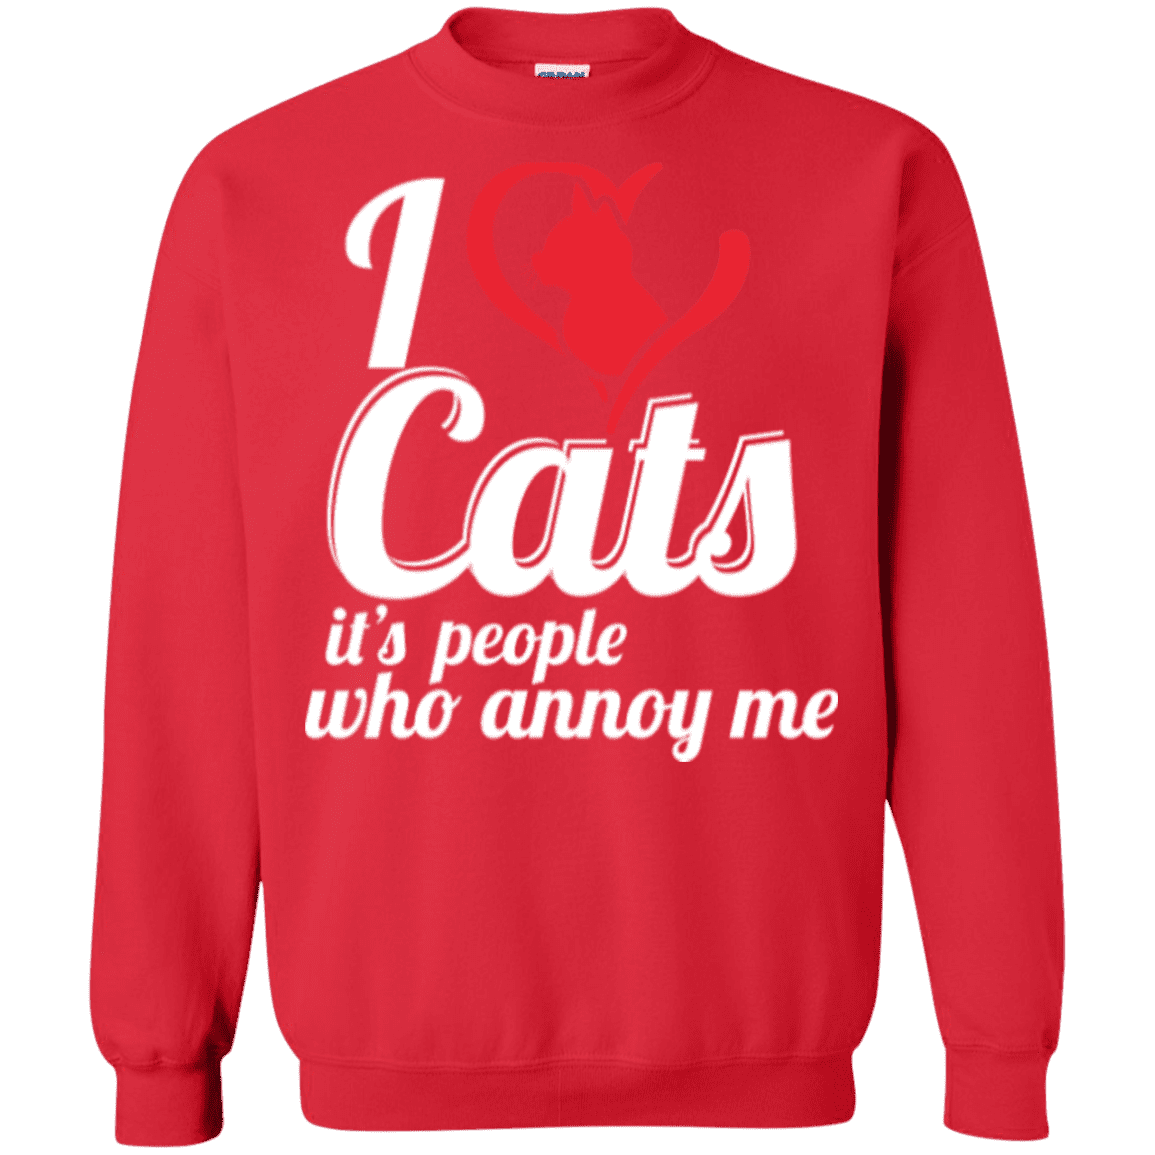 I Love Cats - Sweatshirt.